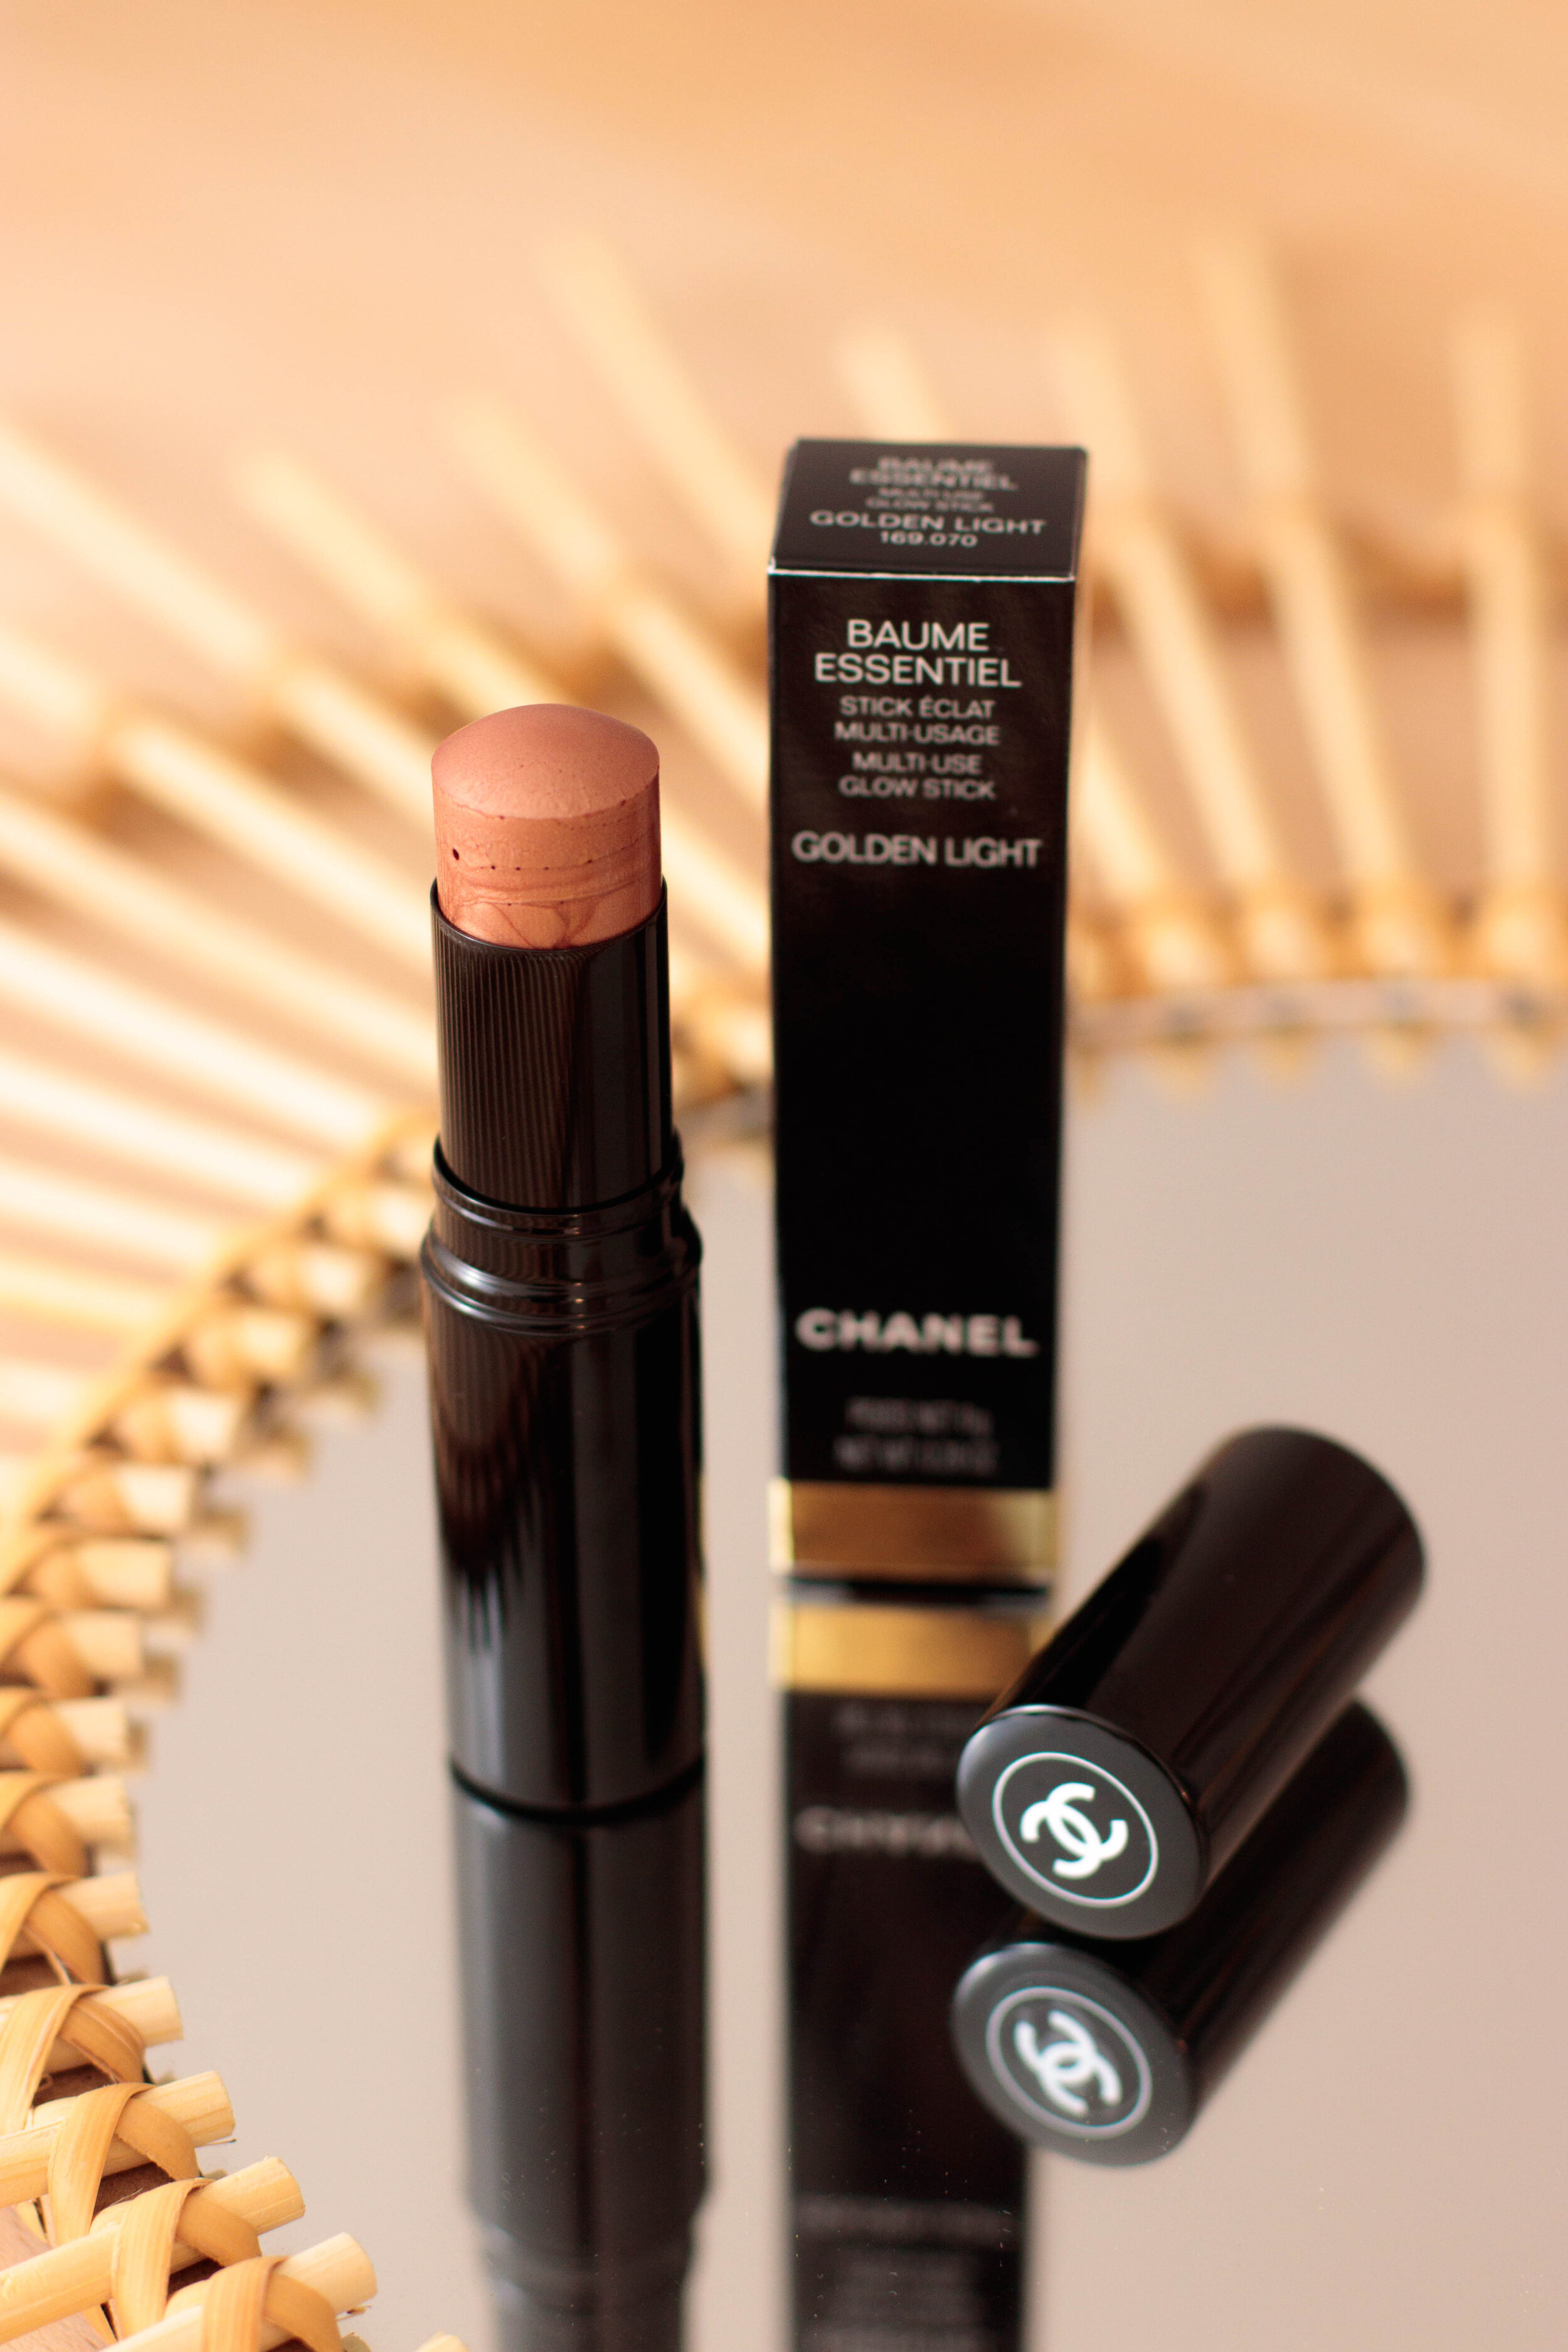 Chanel Baume Essentiel Stick Multi-Usage Golden Light, mon avis ! —  Pauuulette - Blog Makeup